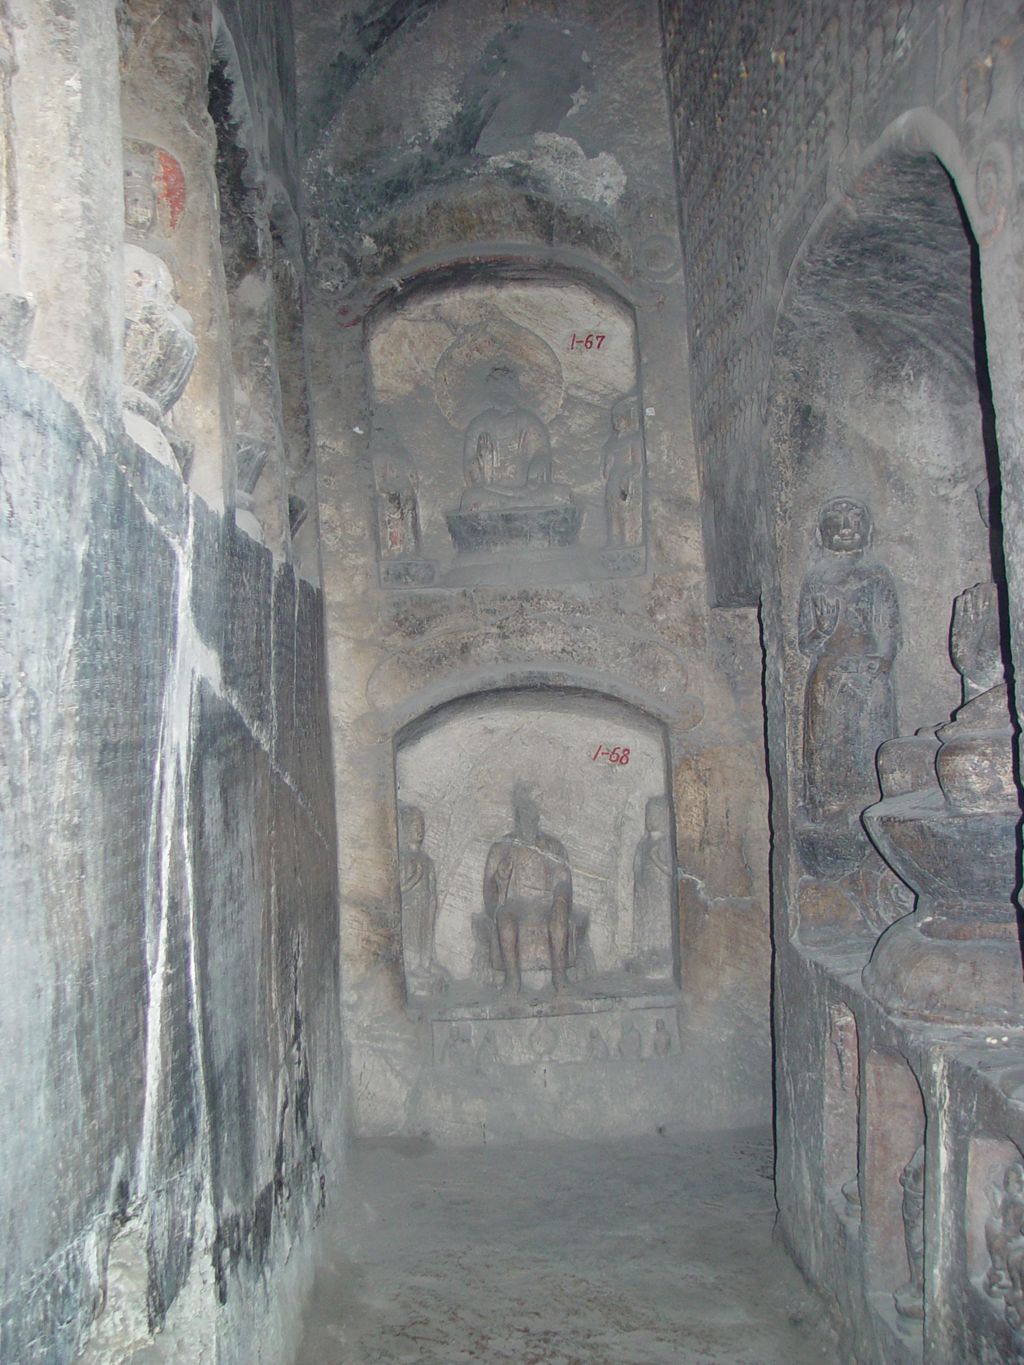 Miniature of Xiangtangshan Caves, interior